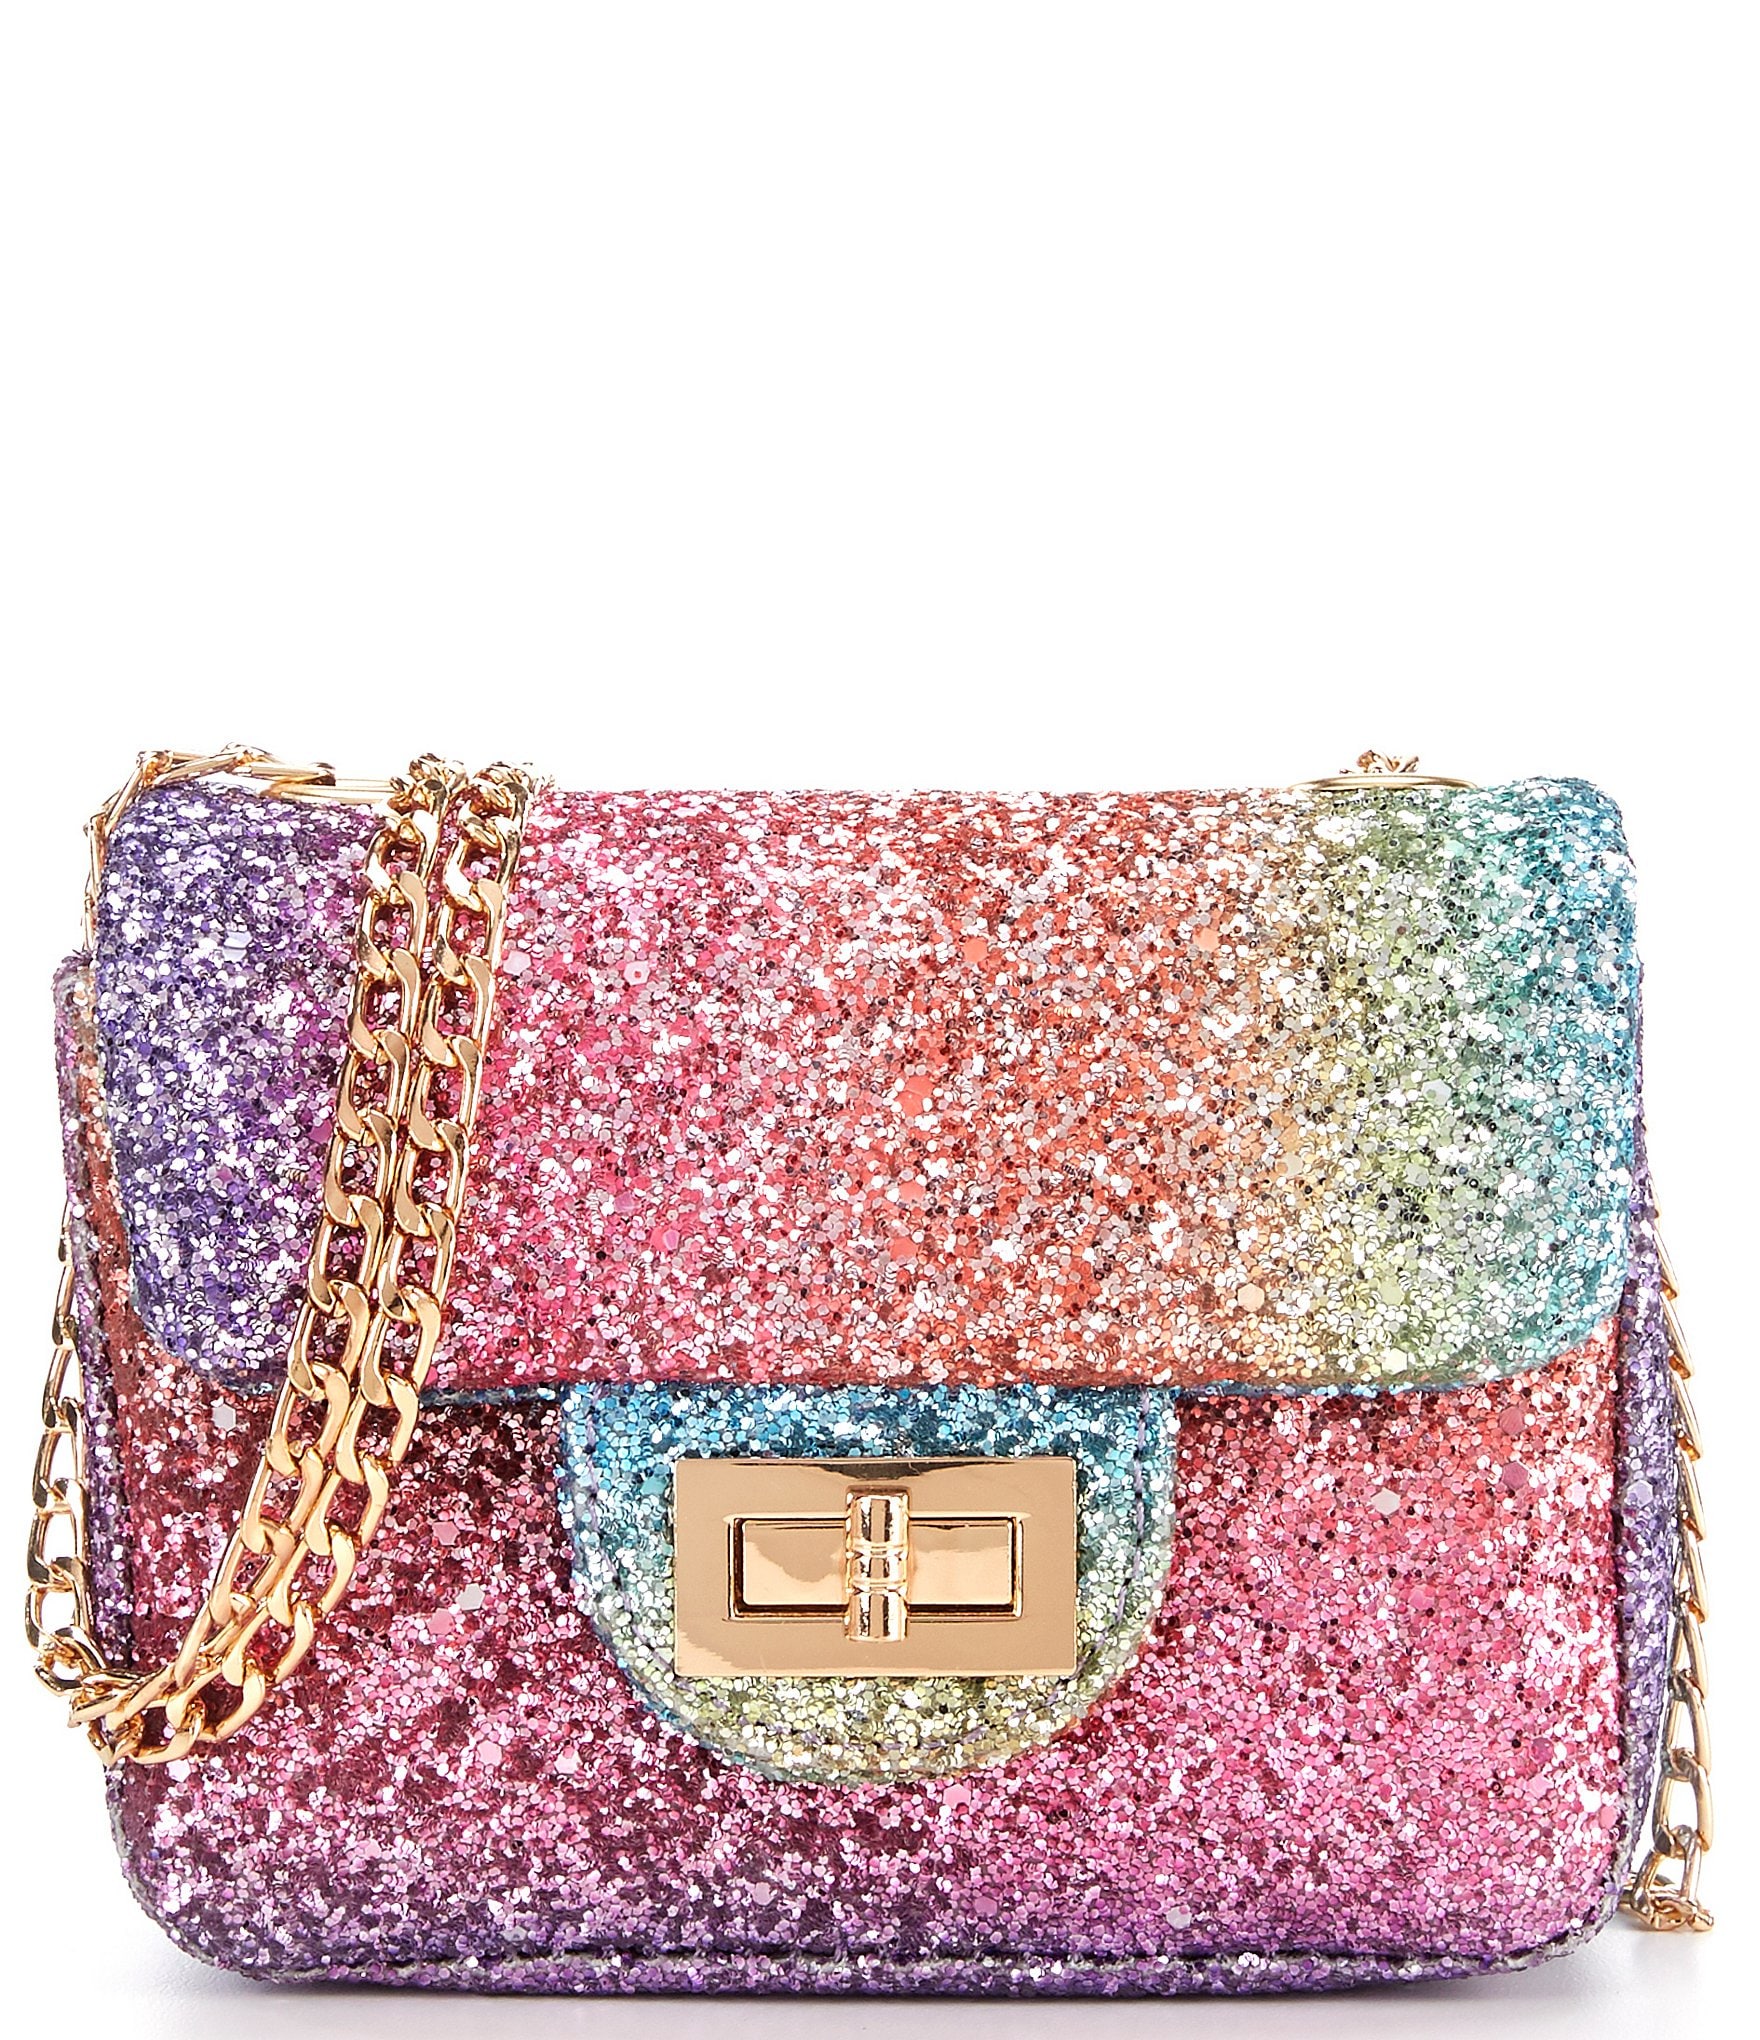 GB Girls Rainbow Glitter Crossbody Handbag